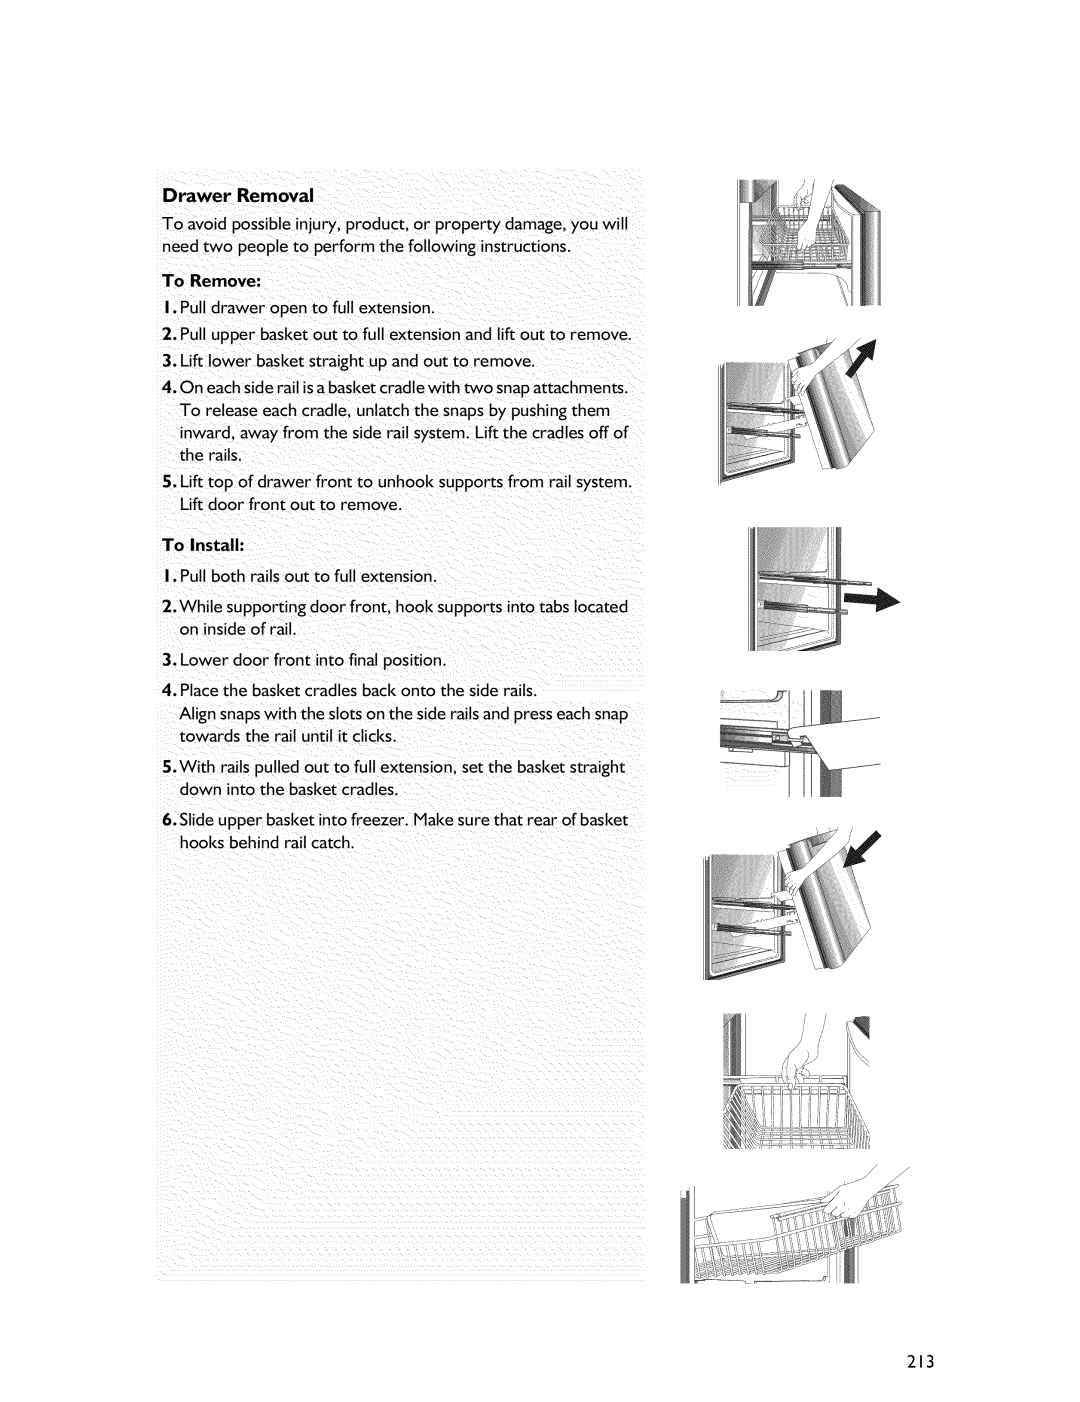 Whirlpool Freezer manual 213, Drawer Removal 